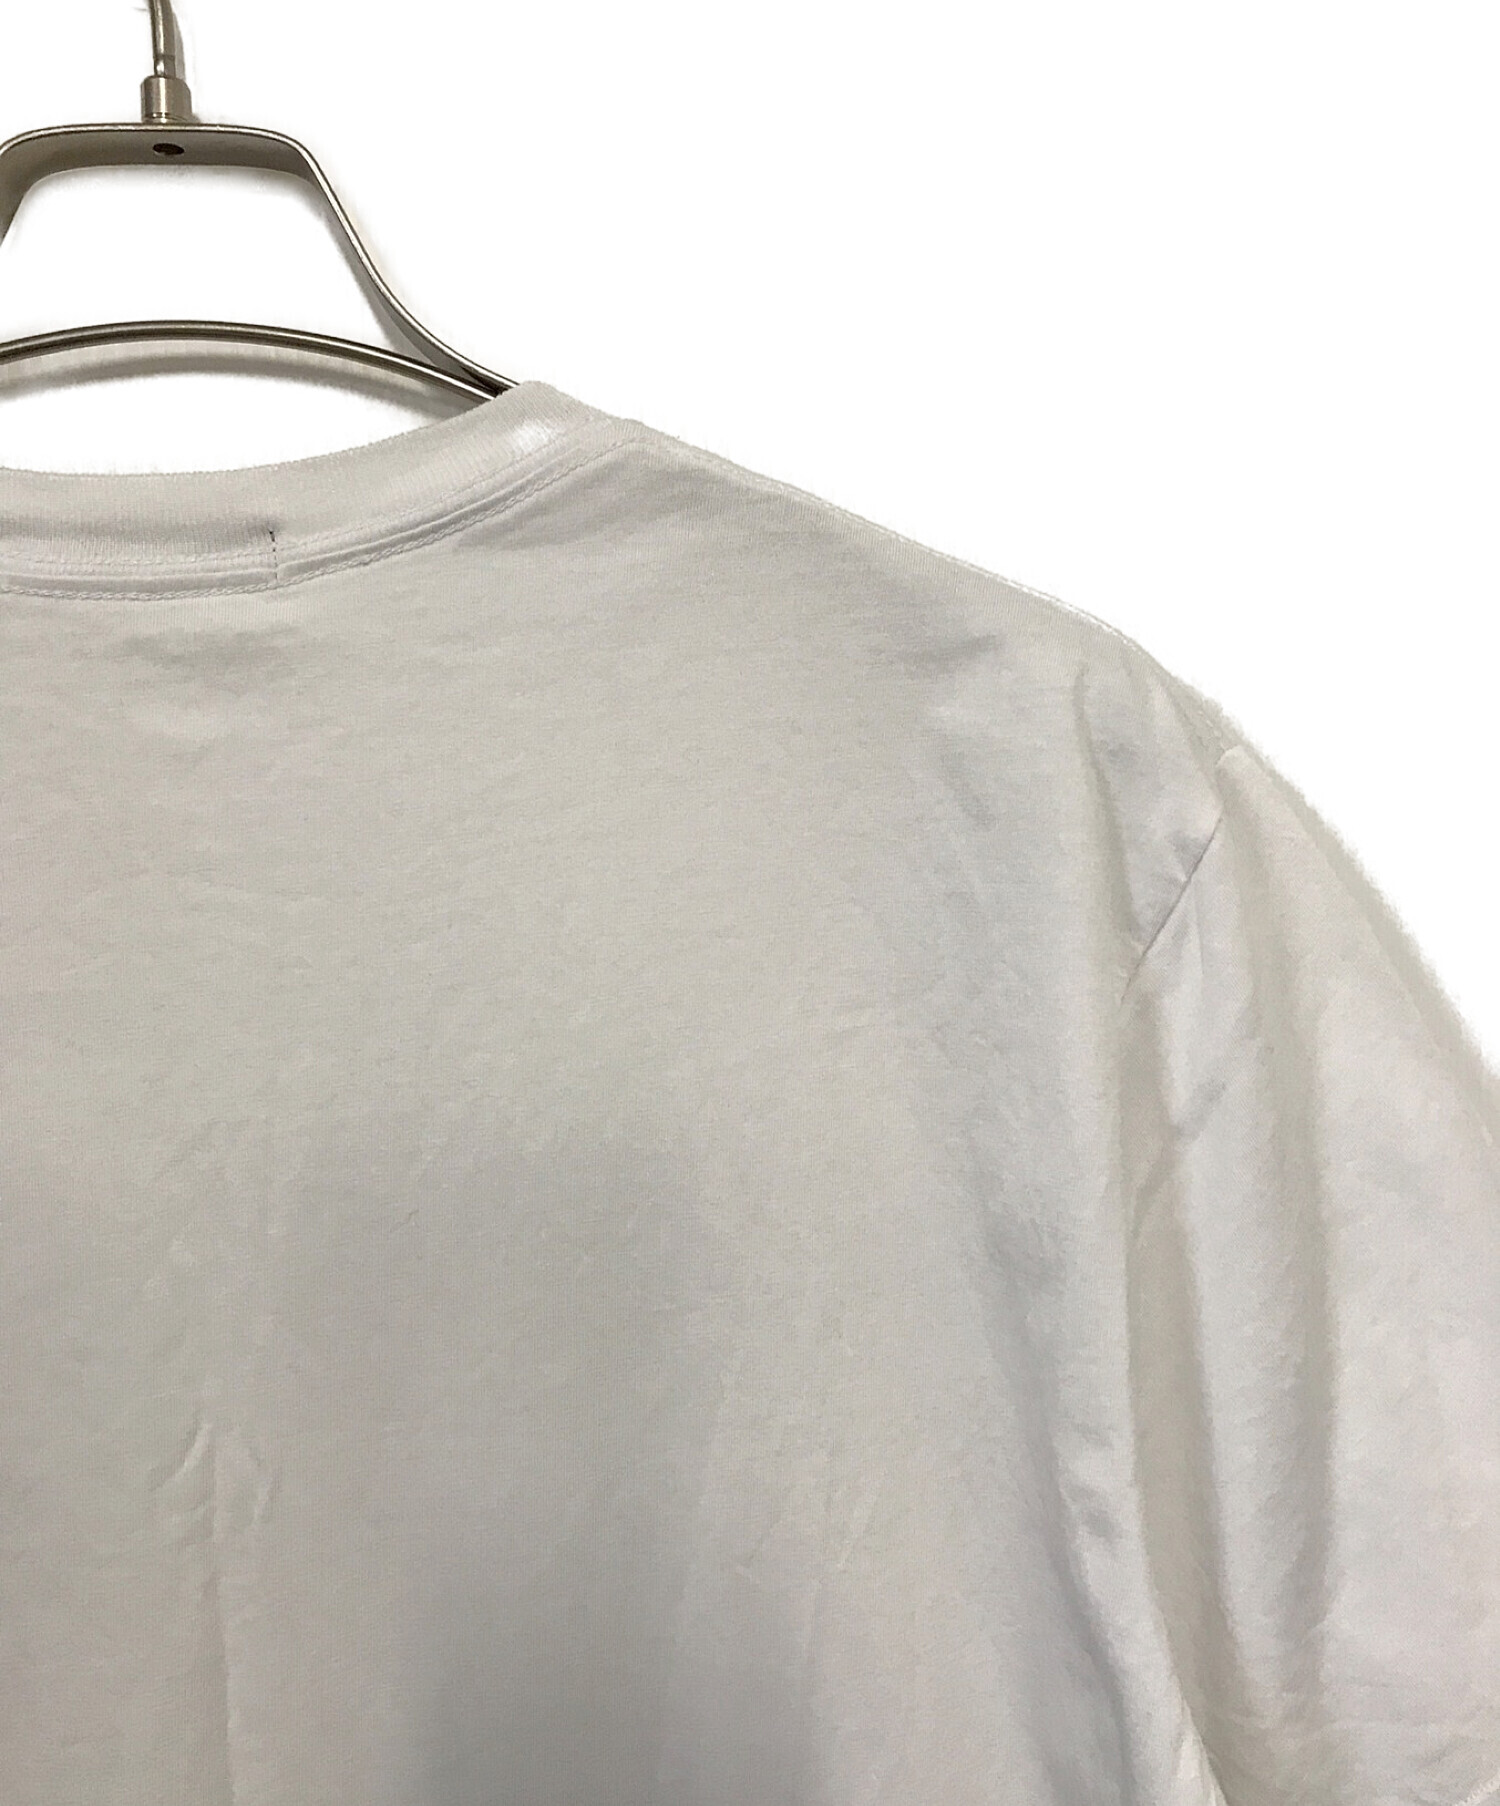 UNDERCOVER jun takahashi (アンダーカバー) UロゴTシャツ ホワイト サイズ:L